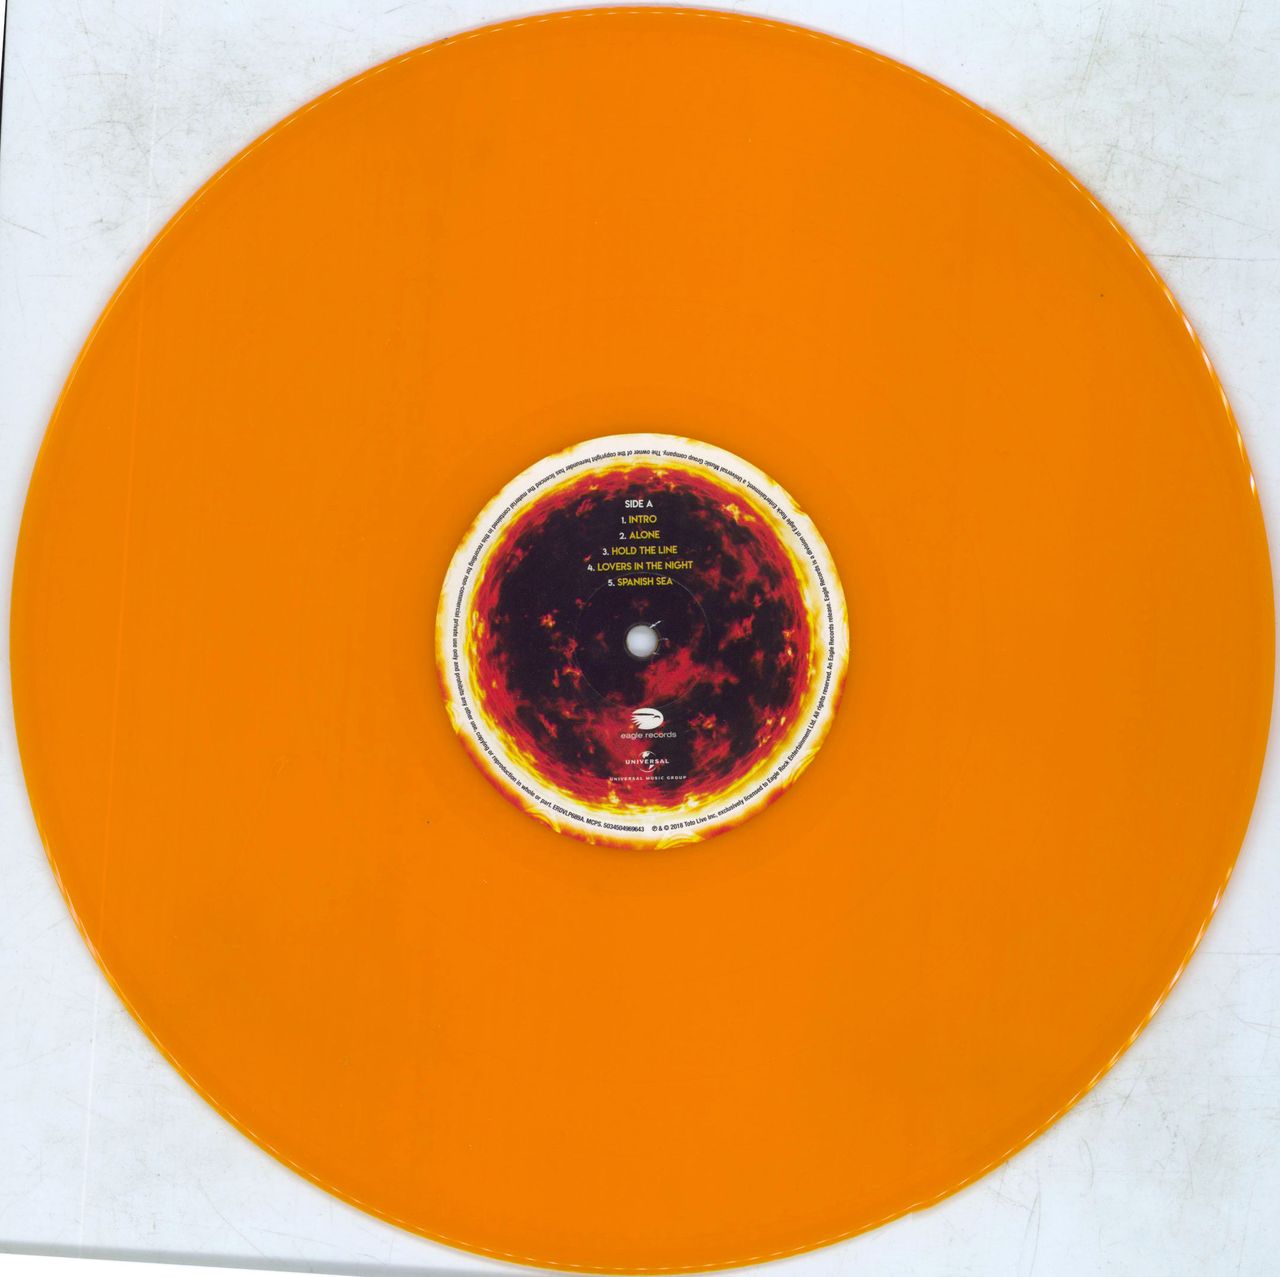 ventilation Afskedige bagværk Toto 40 Tours Around The Sun - 180gm Orange Vinyl UK 3-LP vinyl set —  RareVinyl.com